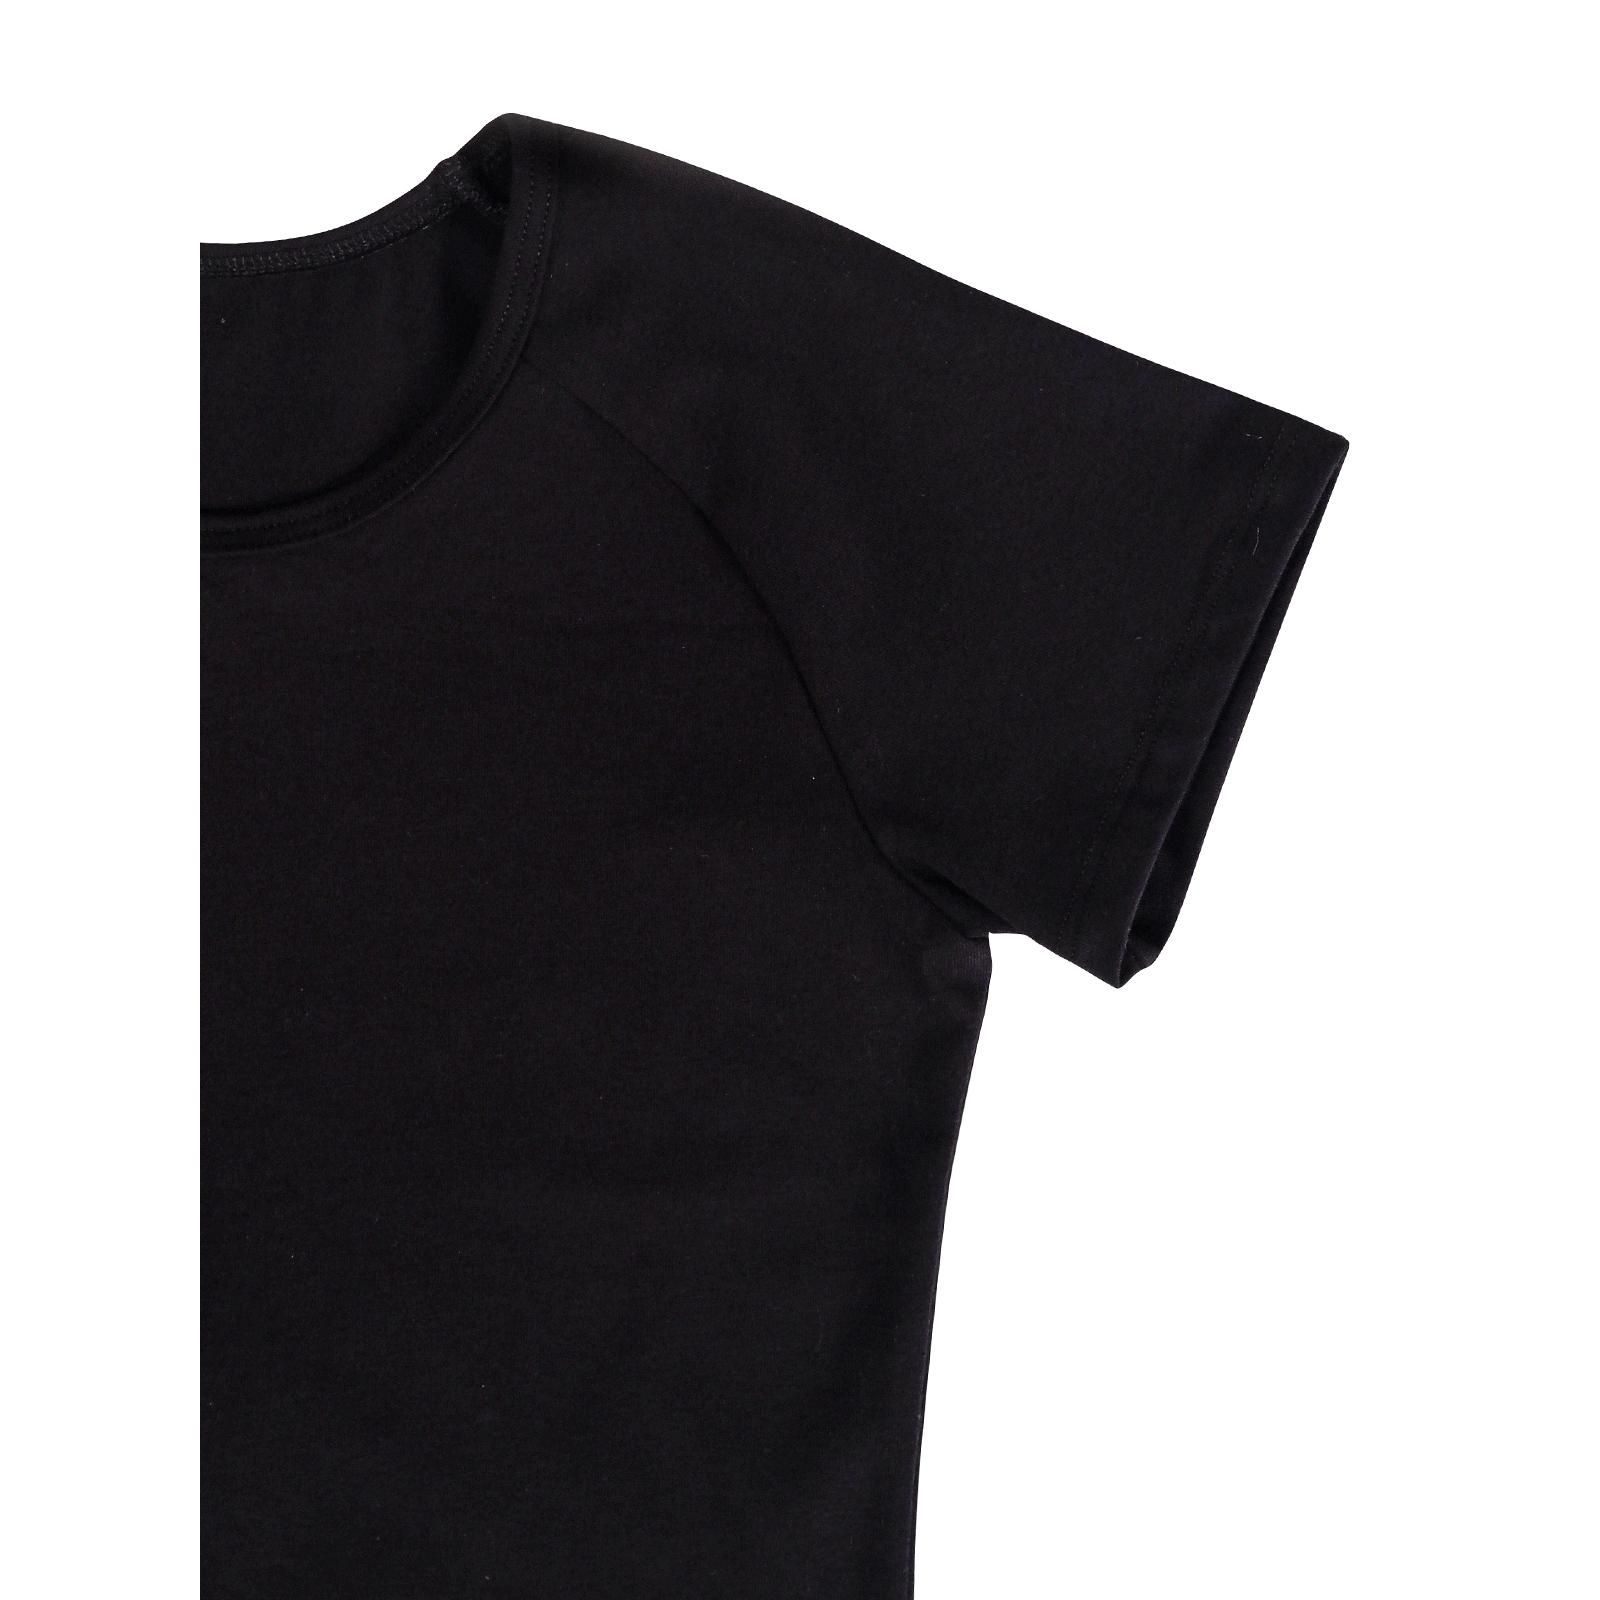 Camiseta Mangas Raglán de Algodón SOLO Negro Talla 32